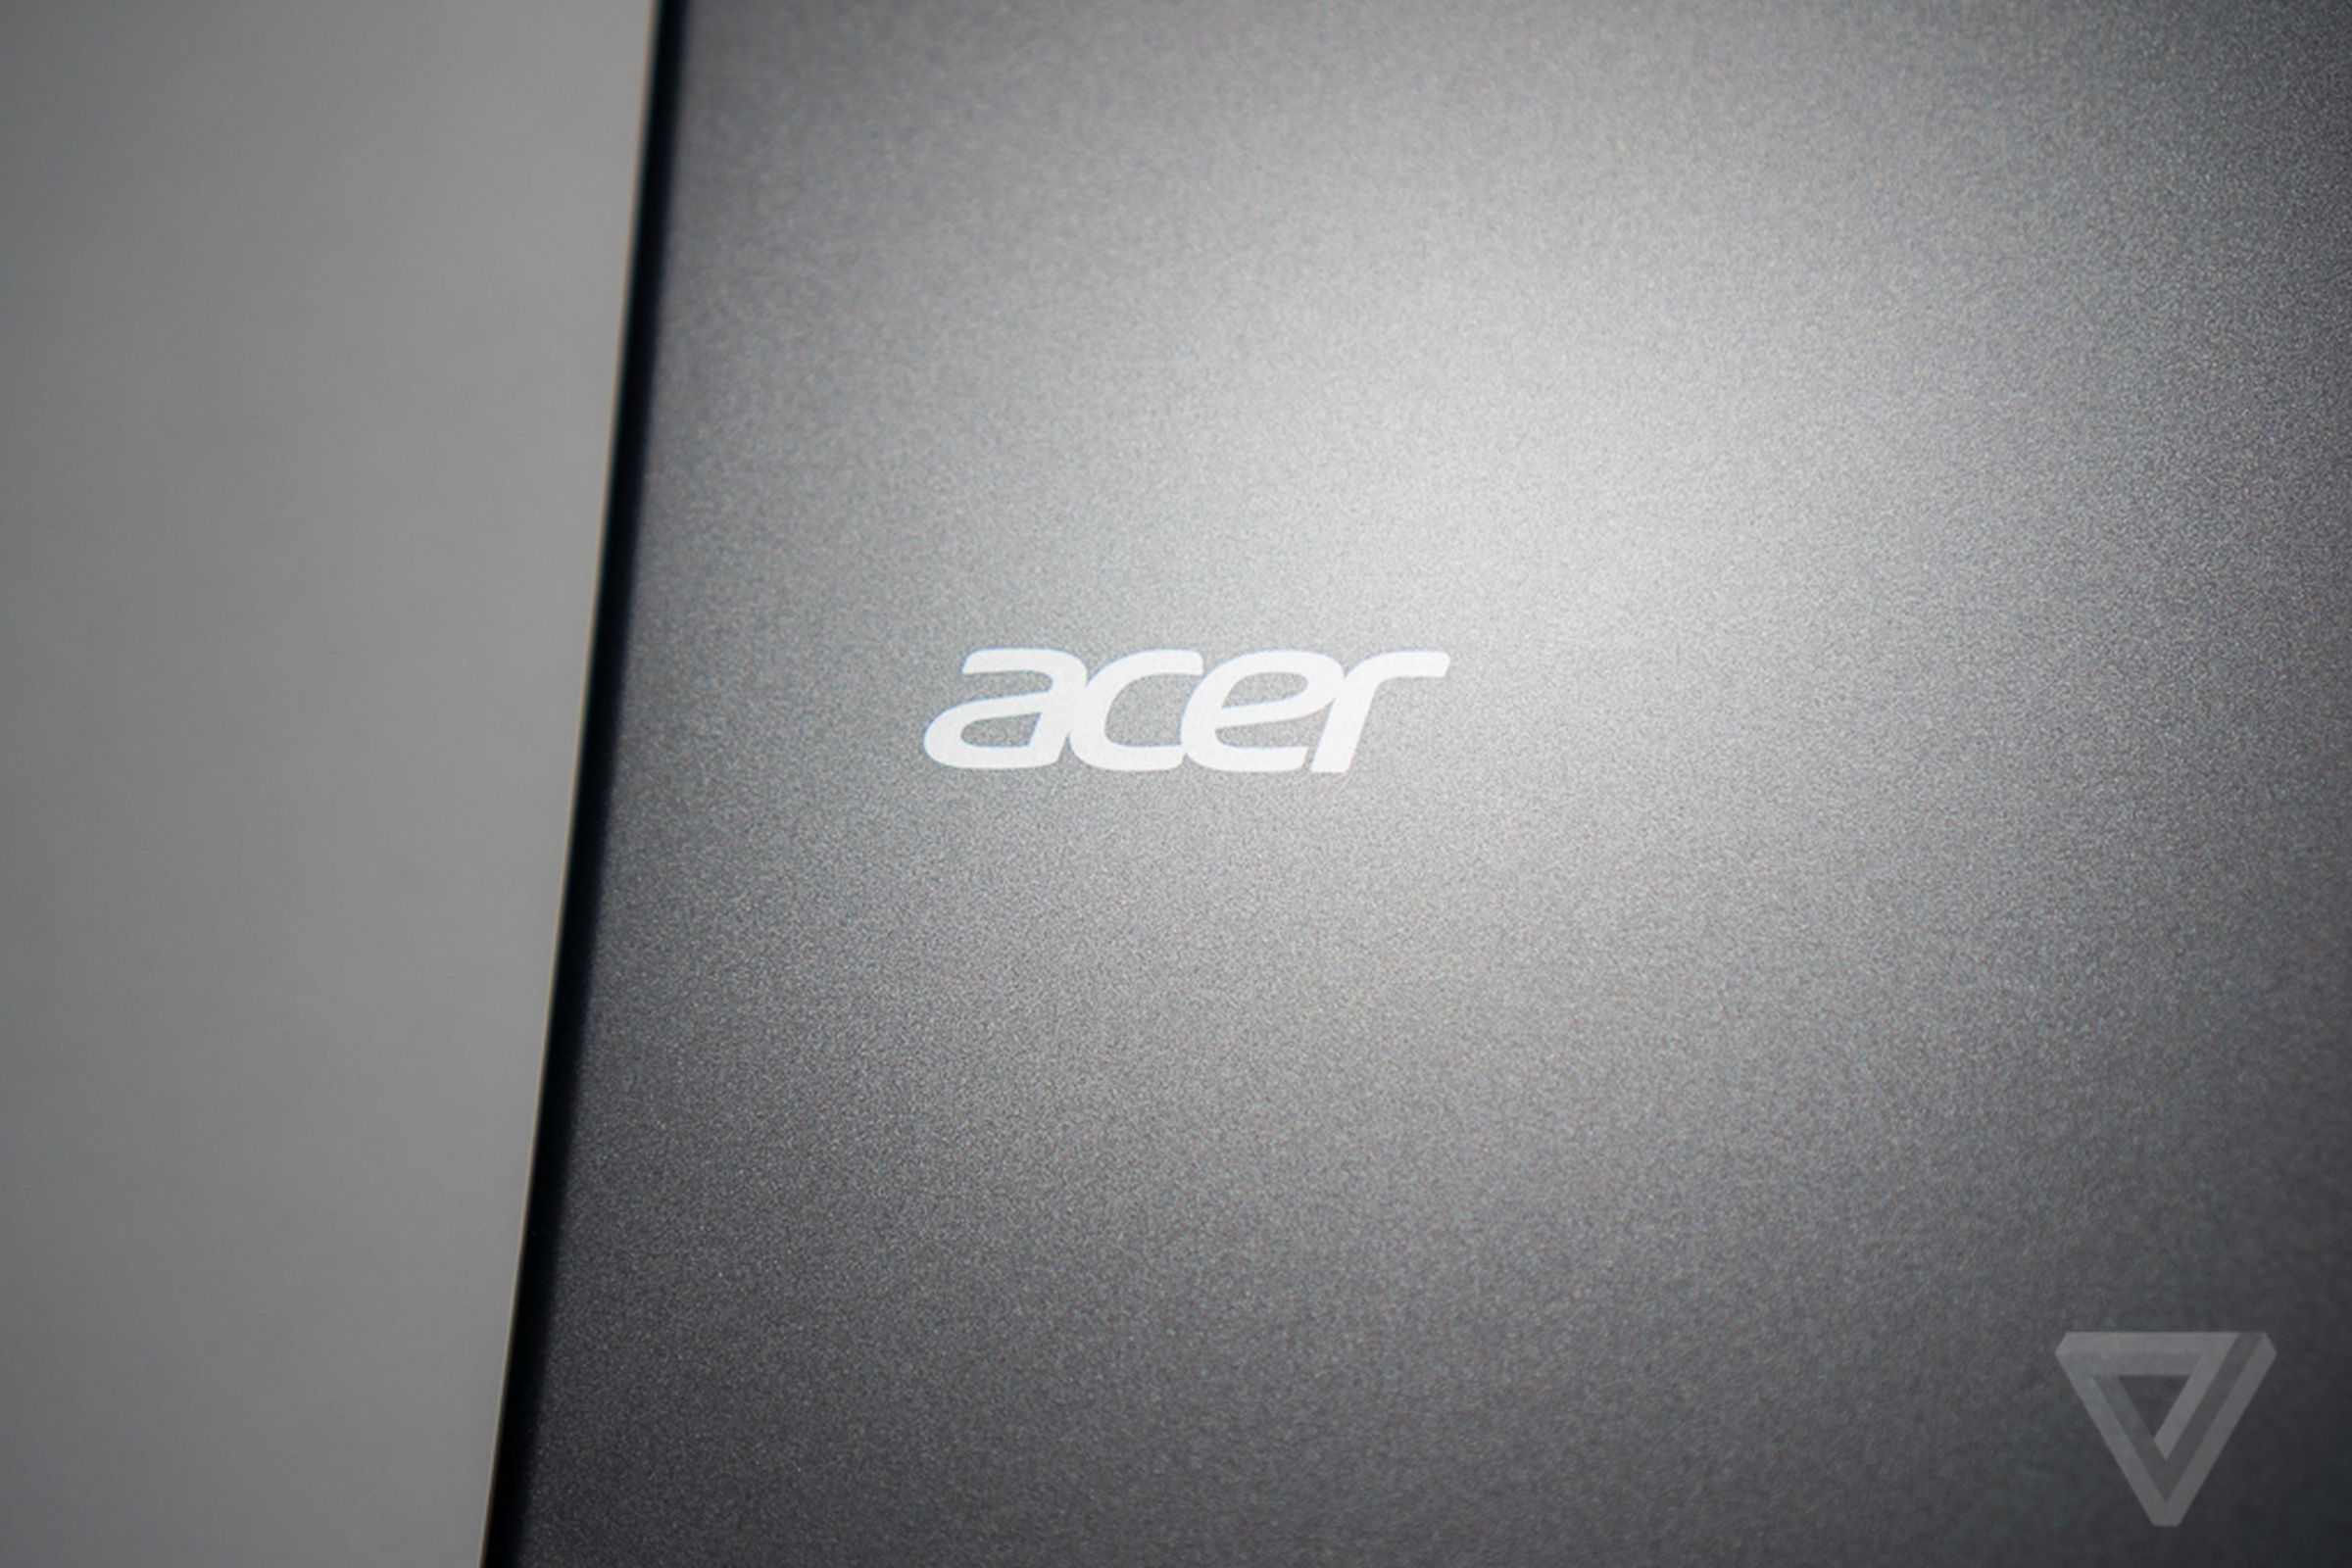 Acer C720 Chromebook 1024px